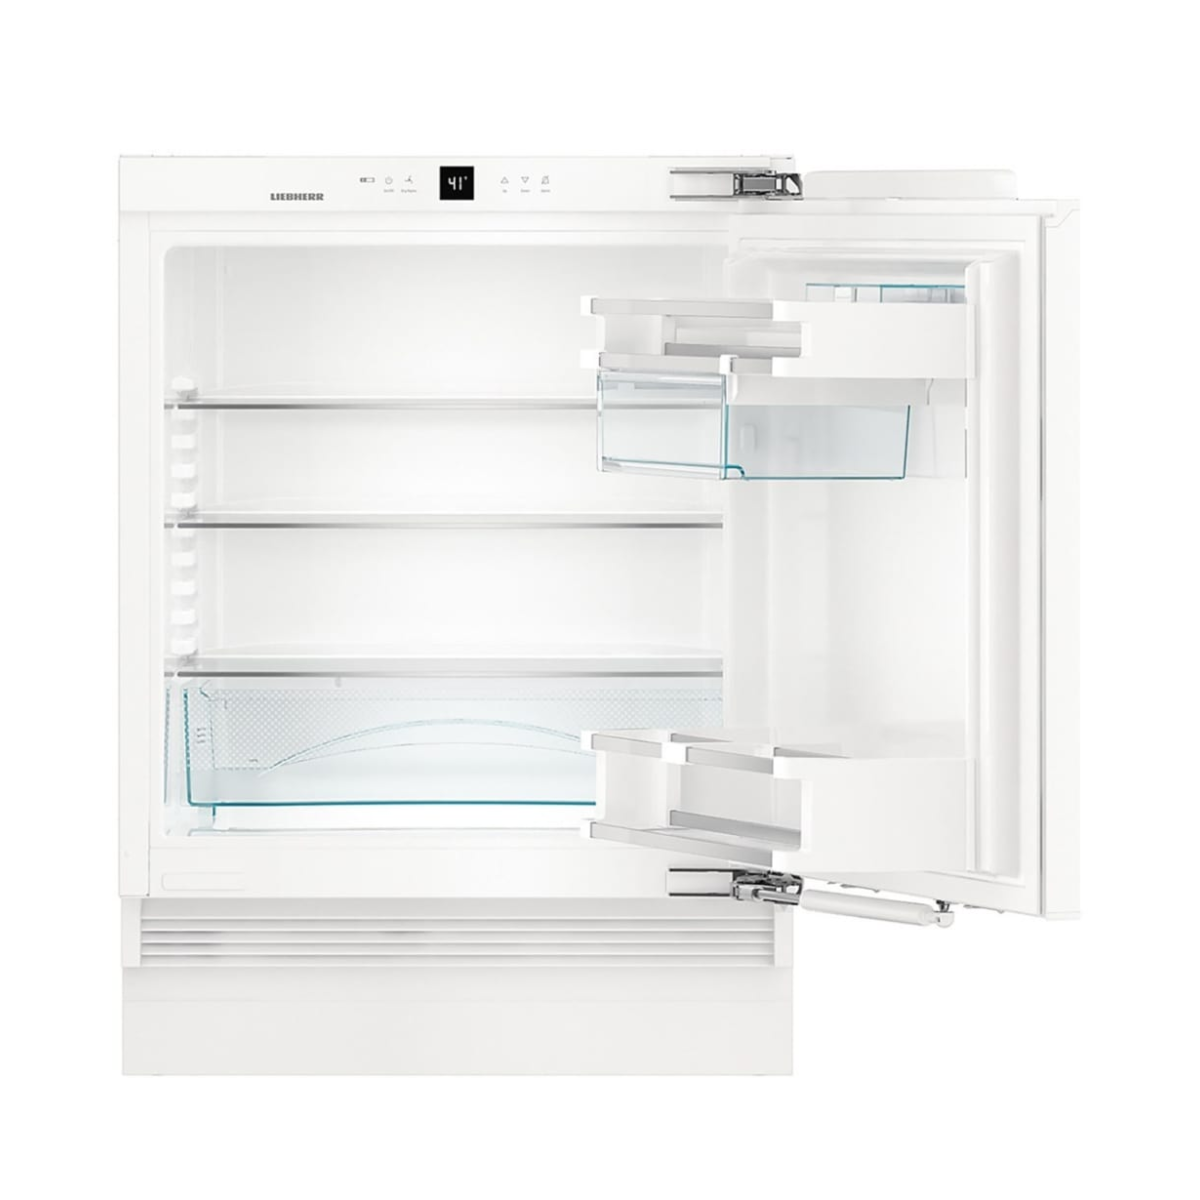 24-Inch Built-in Under-Counter Refrigerator 